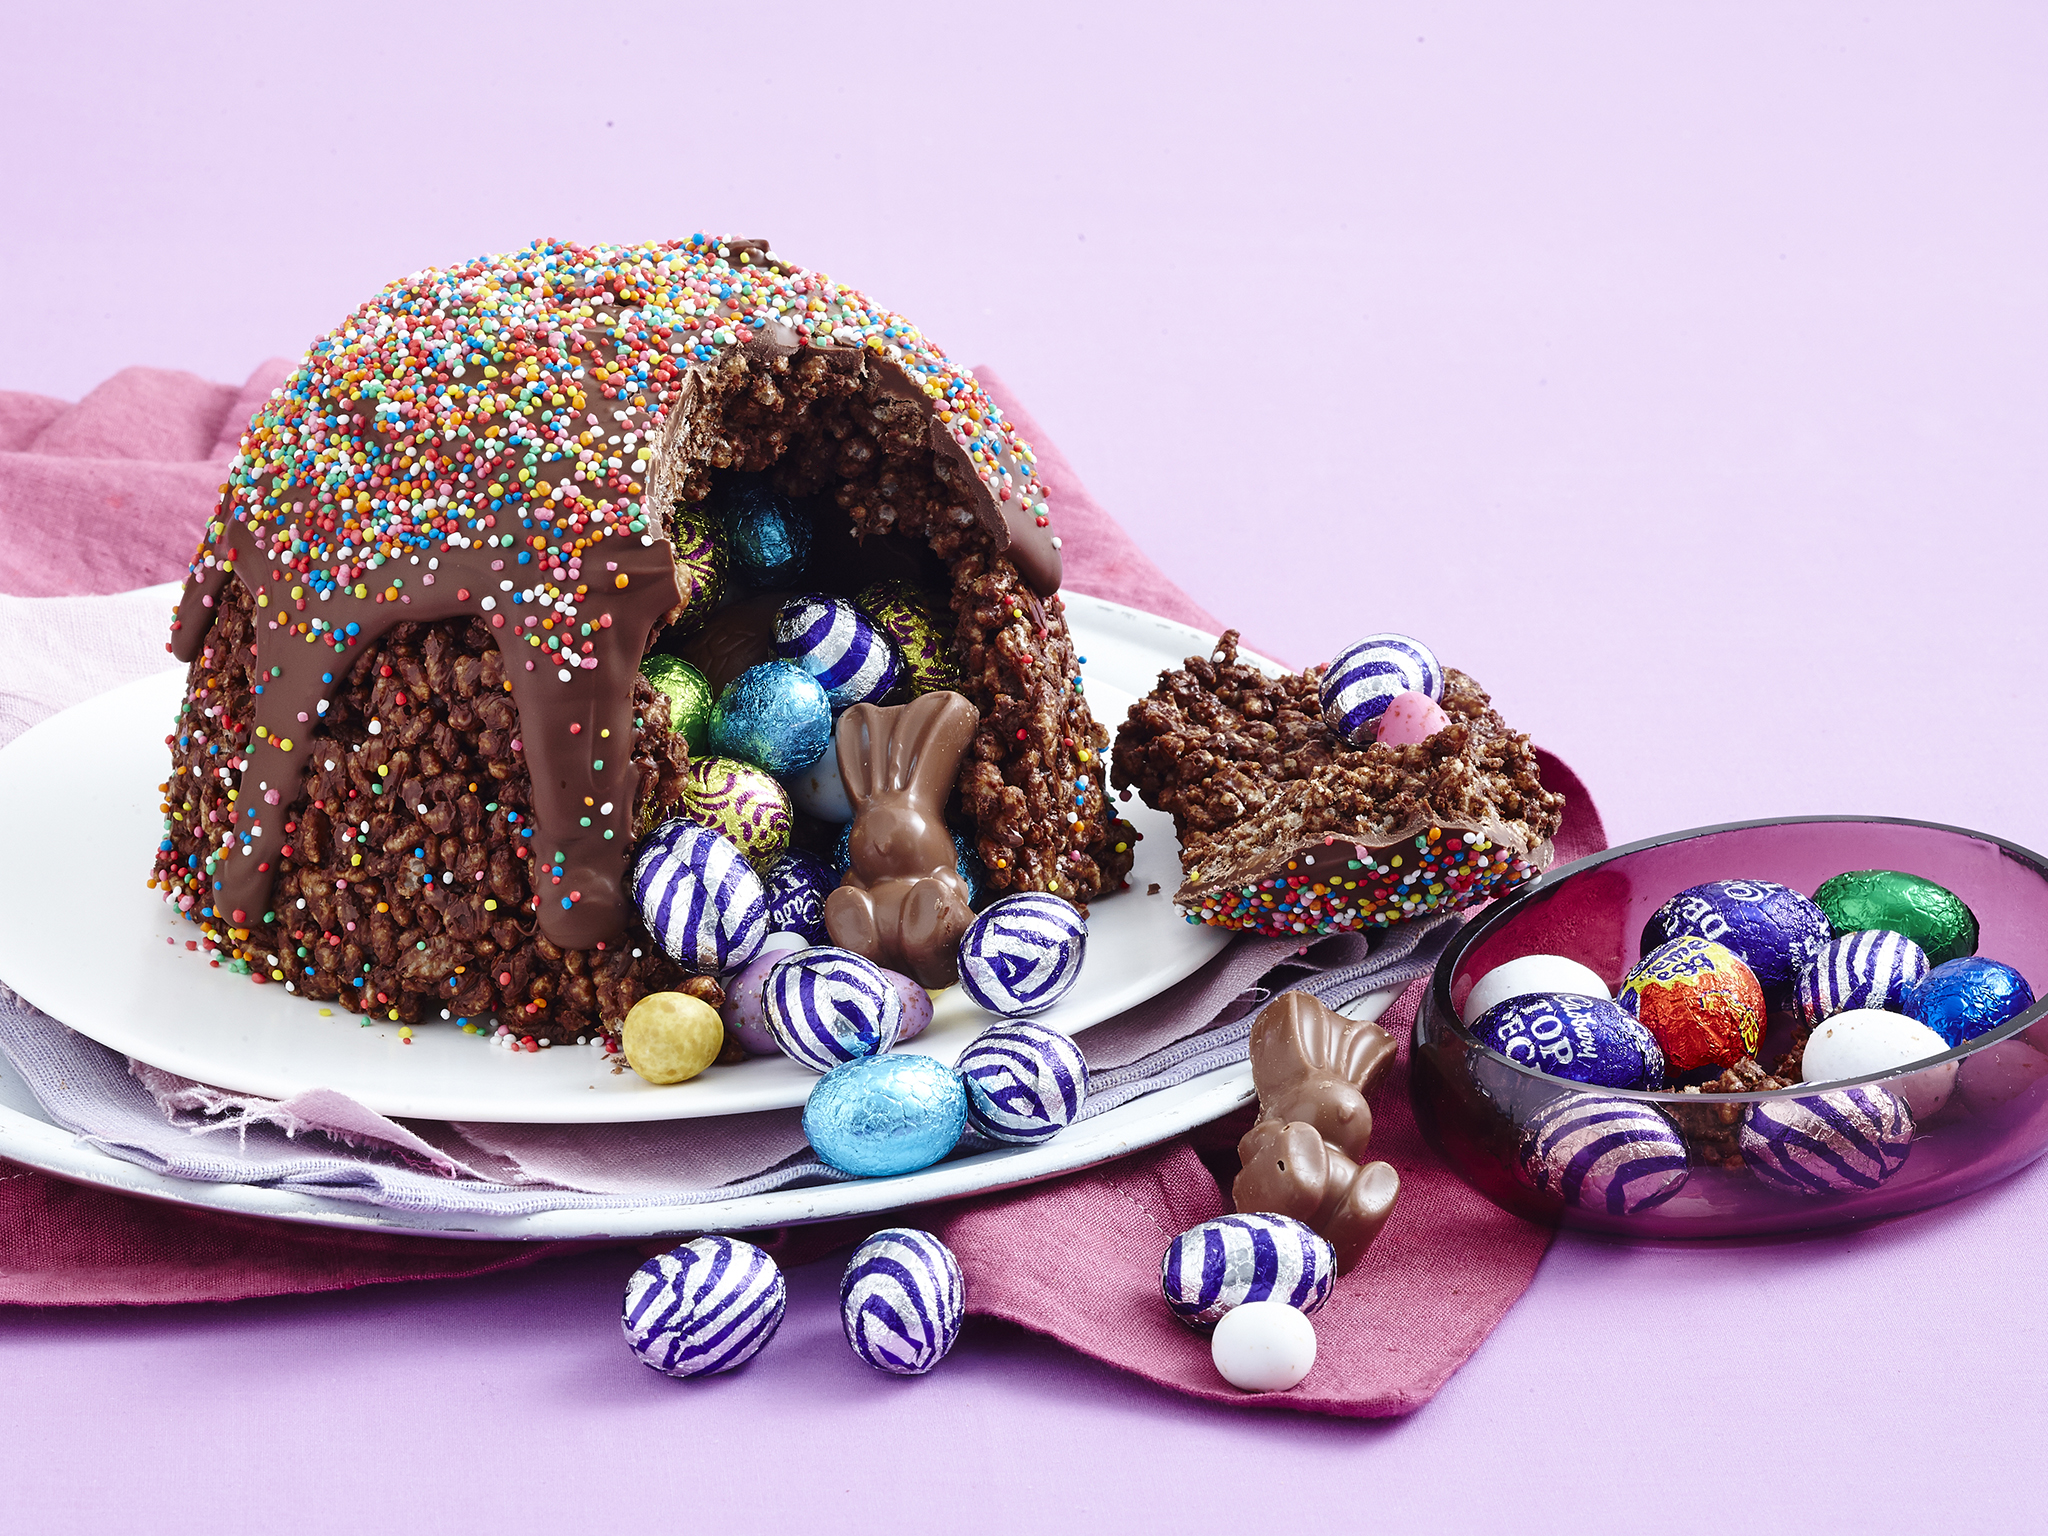 Homemade Easter gift ideas like this chocolate crackle smash cake